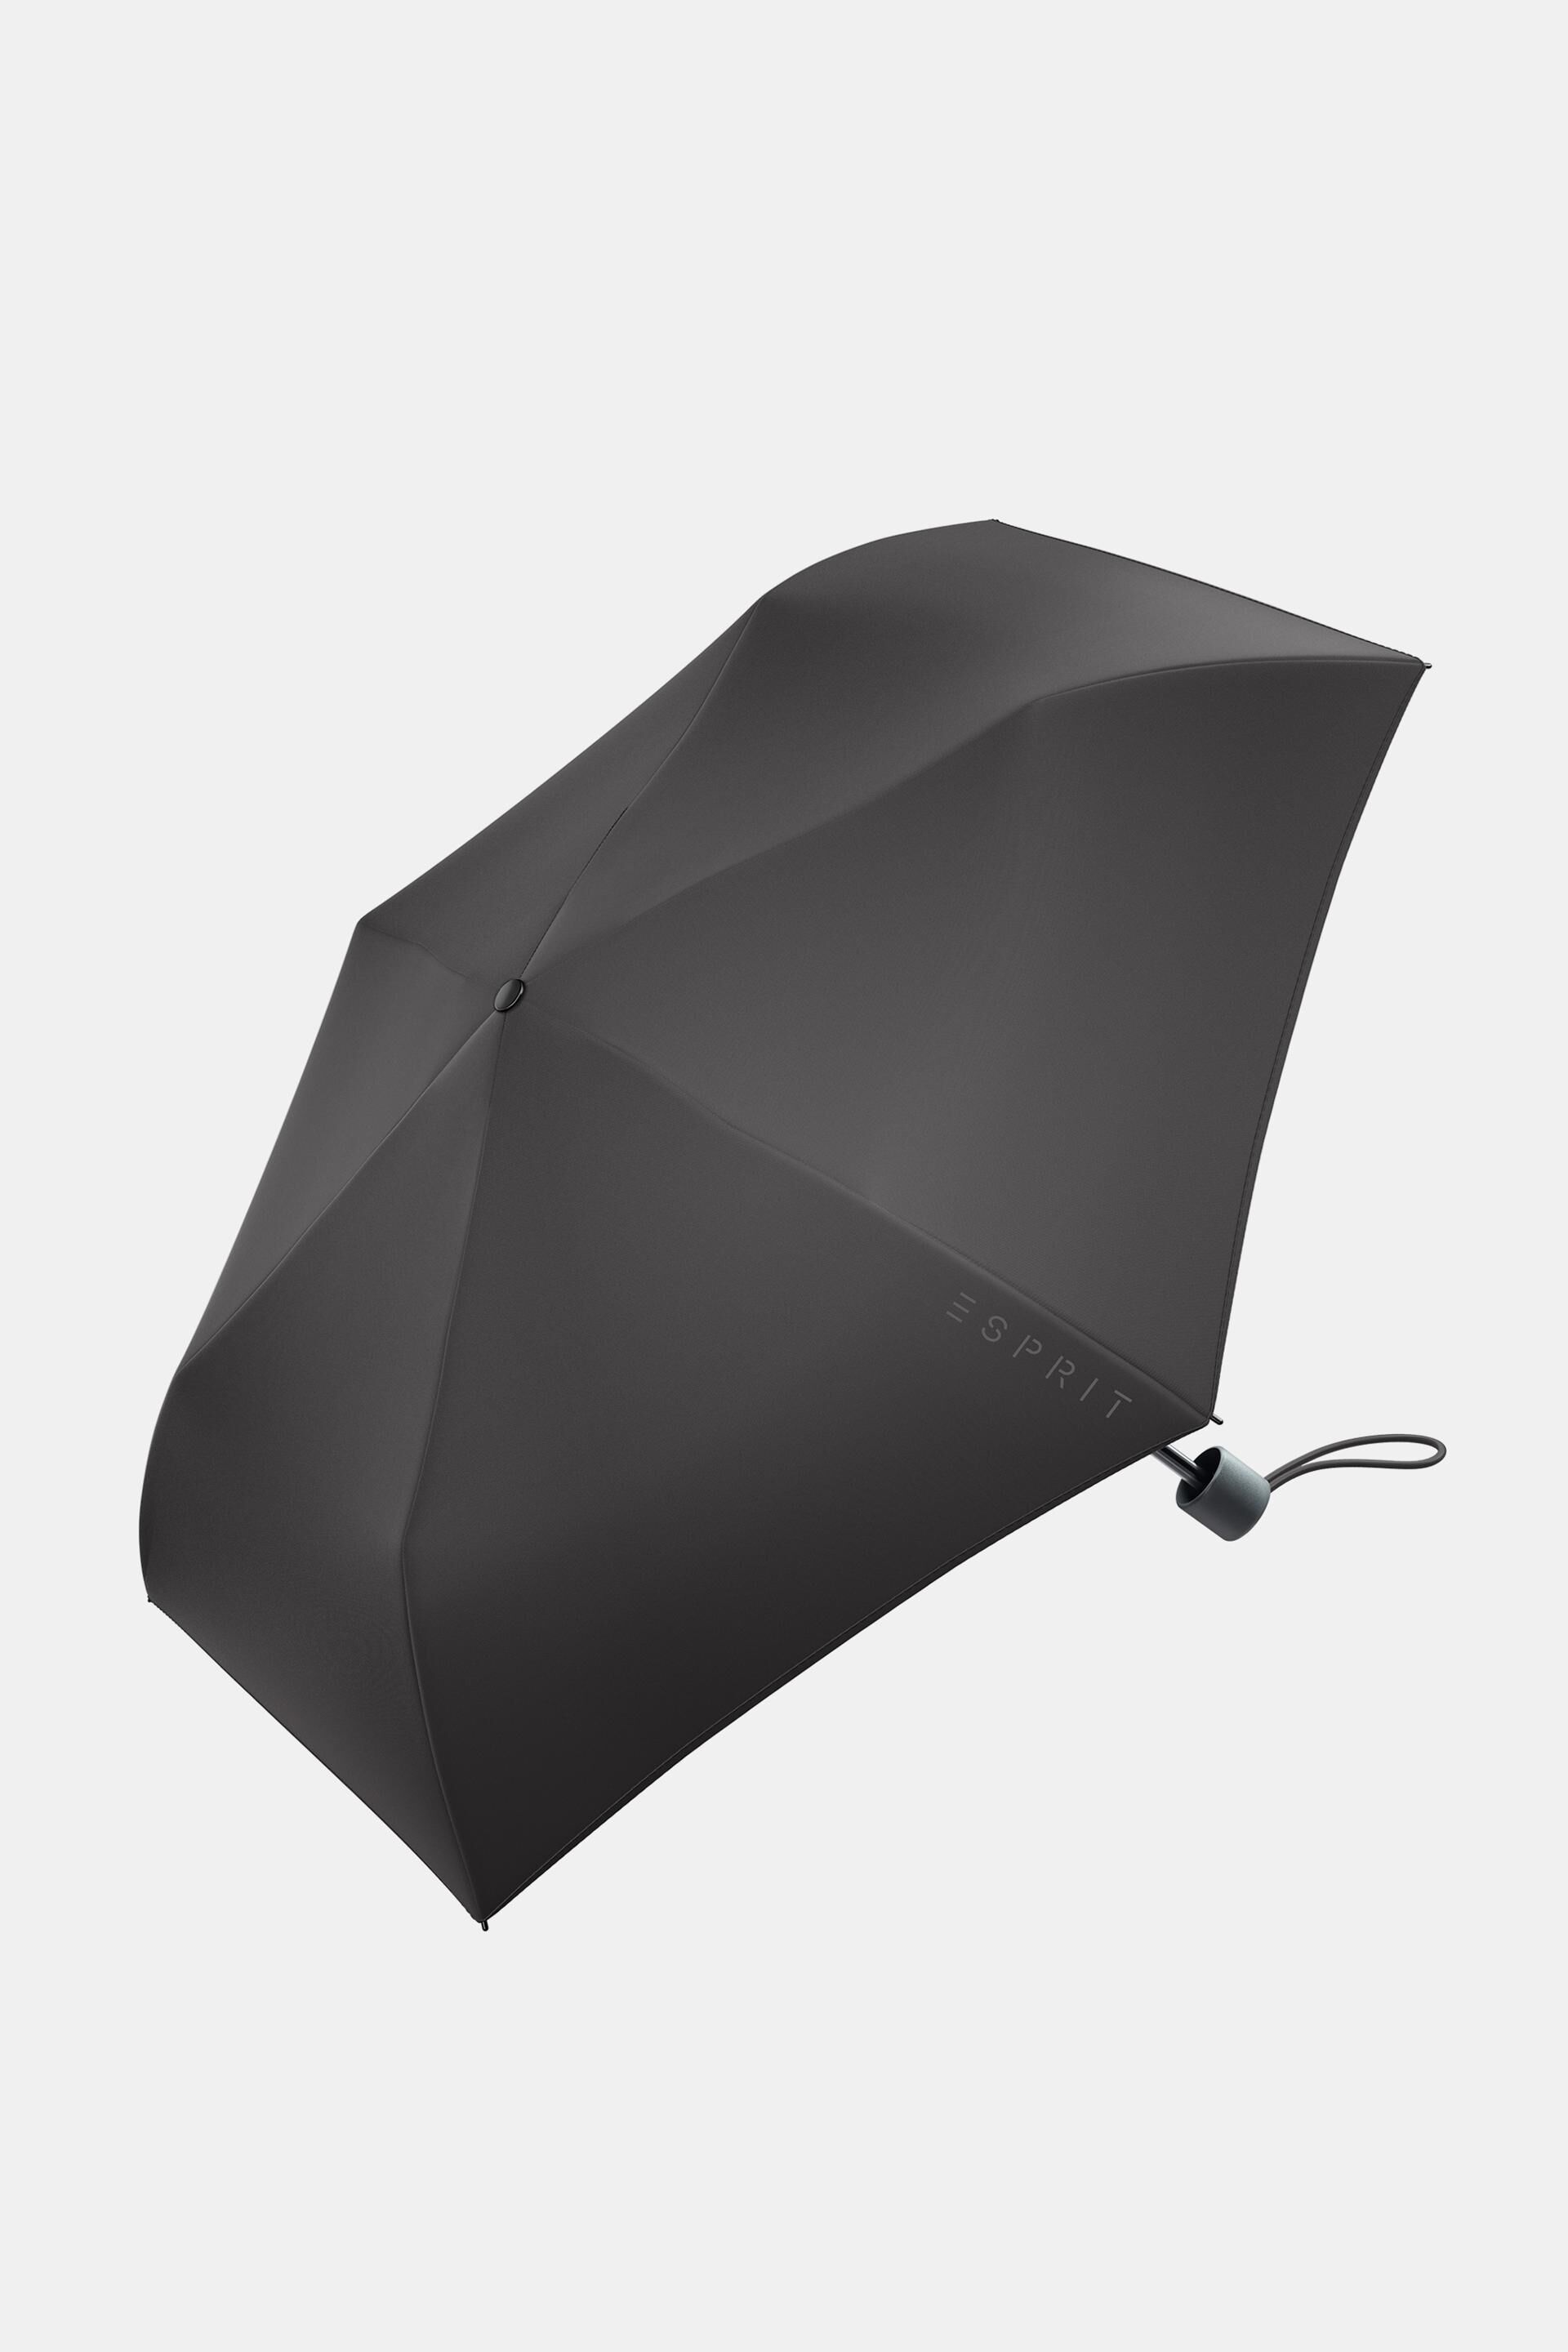 Esprit Pocket in black umbrella logo print with